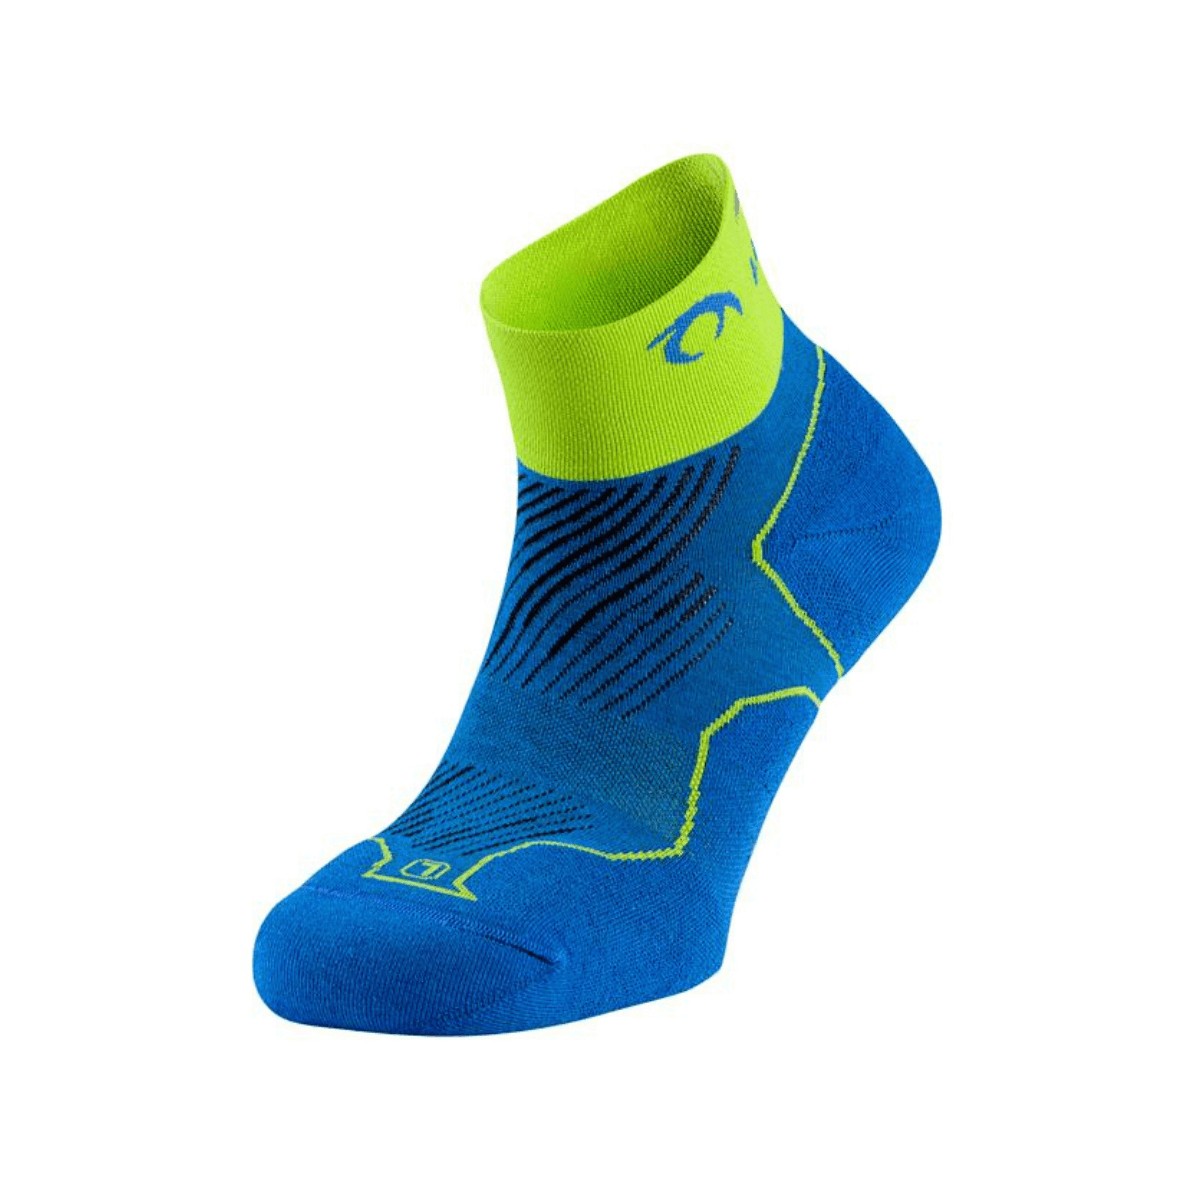 Socken Cool günstig Kaufen-Lurbel Distance Socken Blau Grün, Größe S. Lurbel Distance Socken Blau Grün, Größe S <![CDATA[Eigenschaften Running Lurbel Distanzsocken Die Lurbel Distance sind technische Socken aus 50 % Regenactiv, 25 % Cool-Tech, 17 % Pol